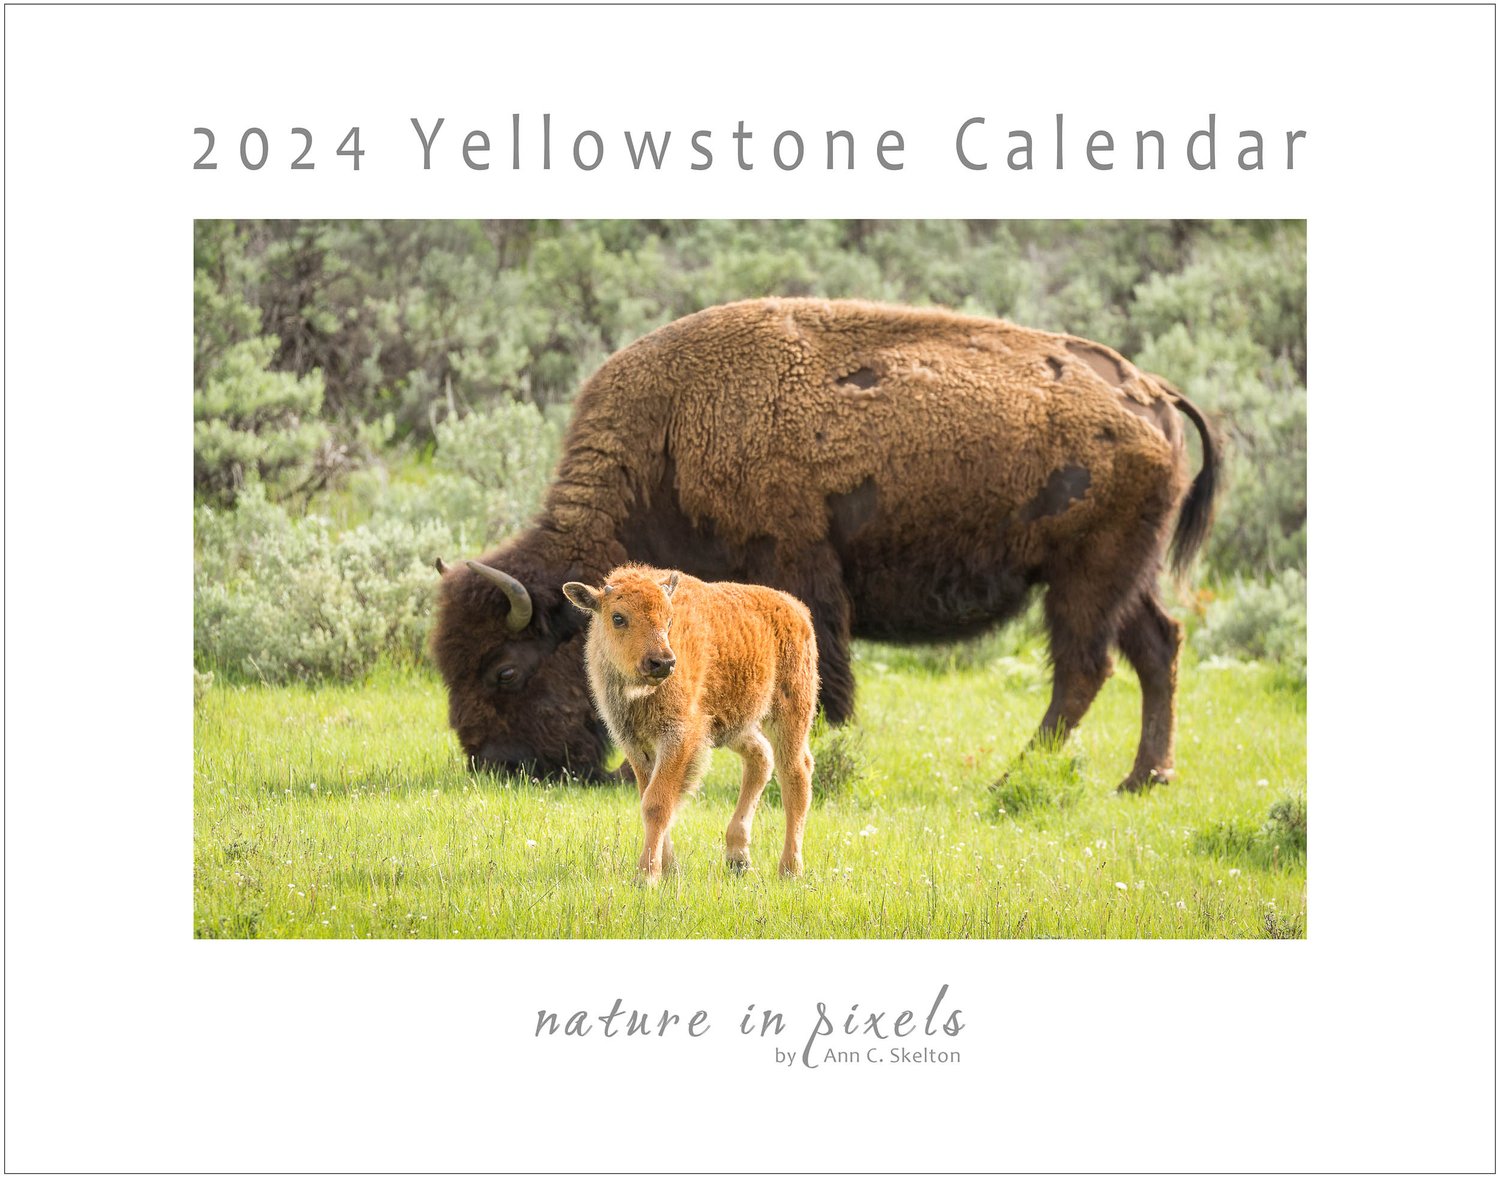 2024 Yellowstone Calendar — Yellowstone Wonders LLC